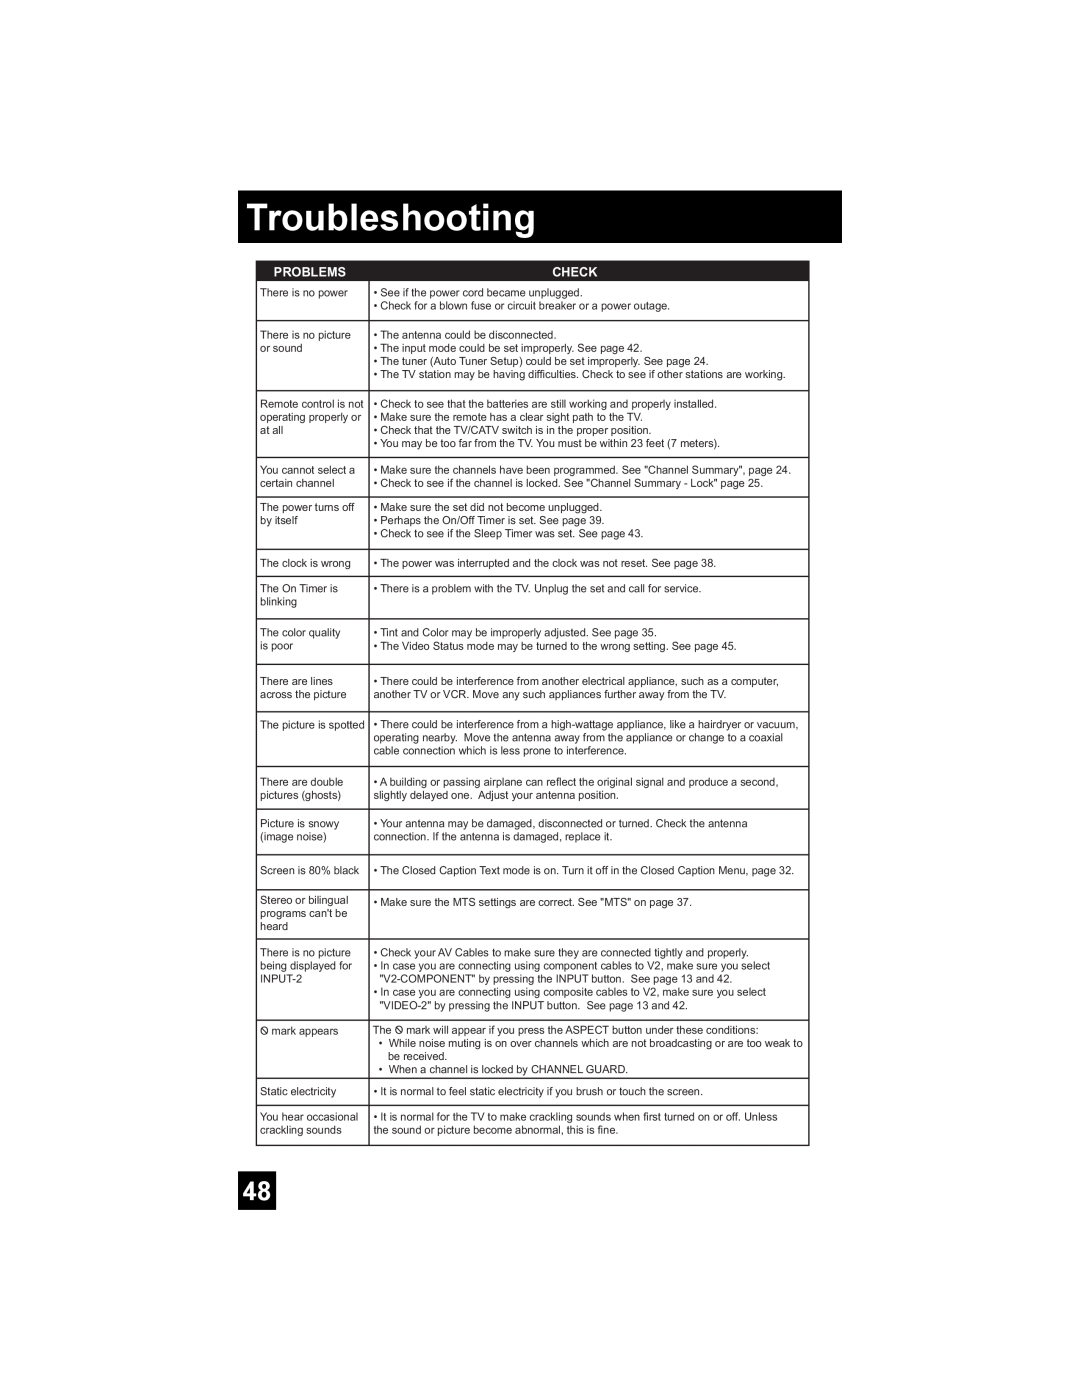 JVC AV 30W476 manual Troubleshooting, Problems, Check 